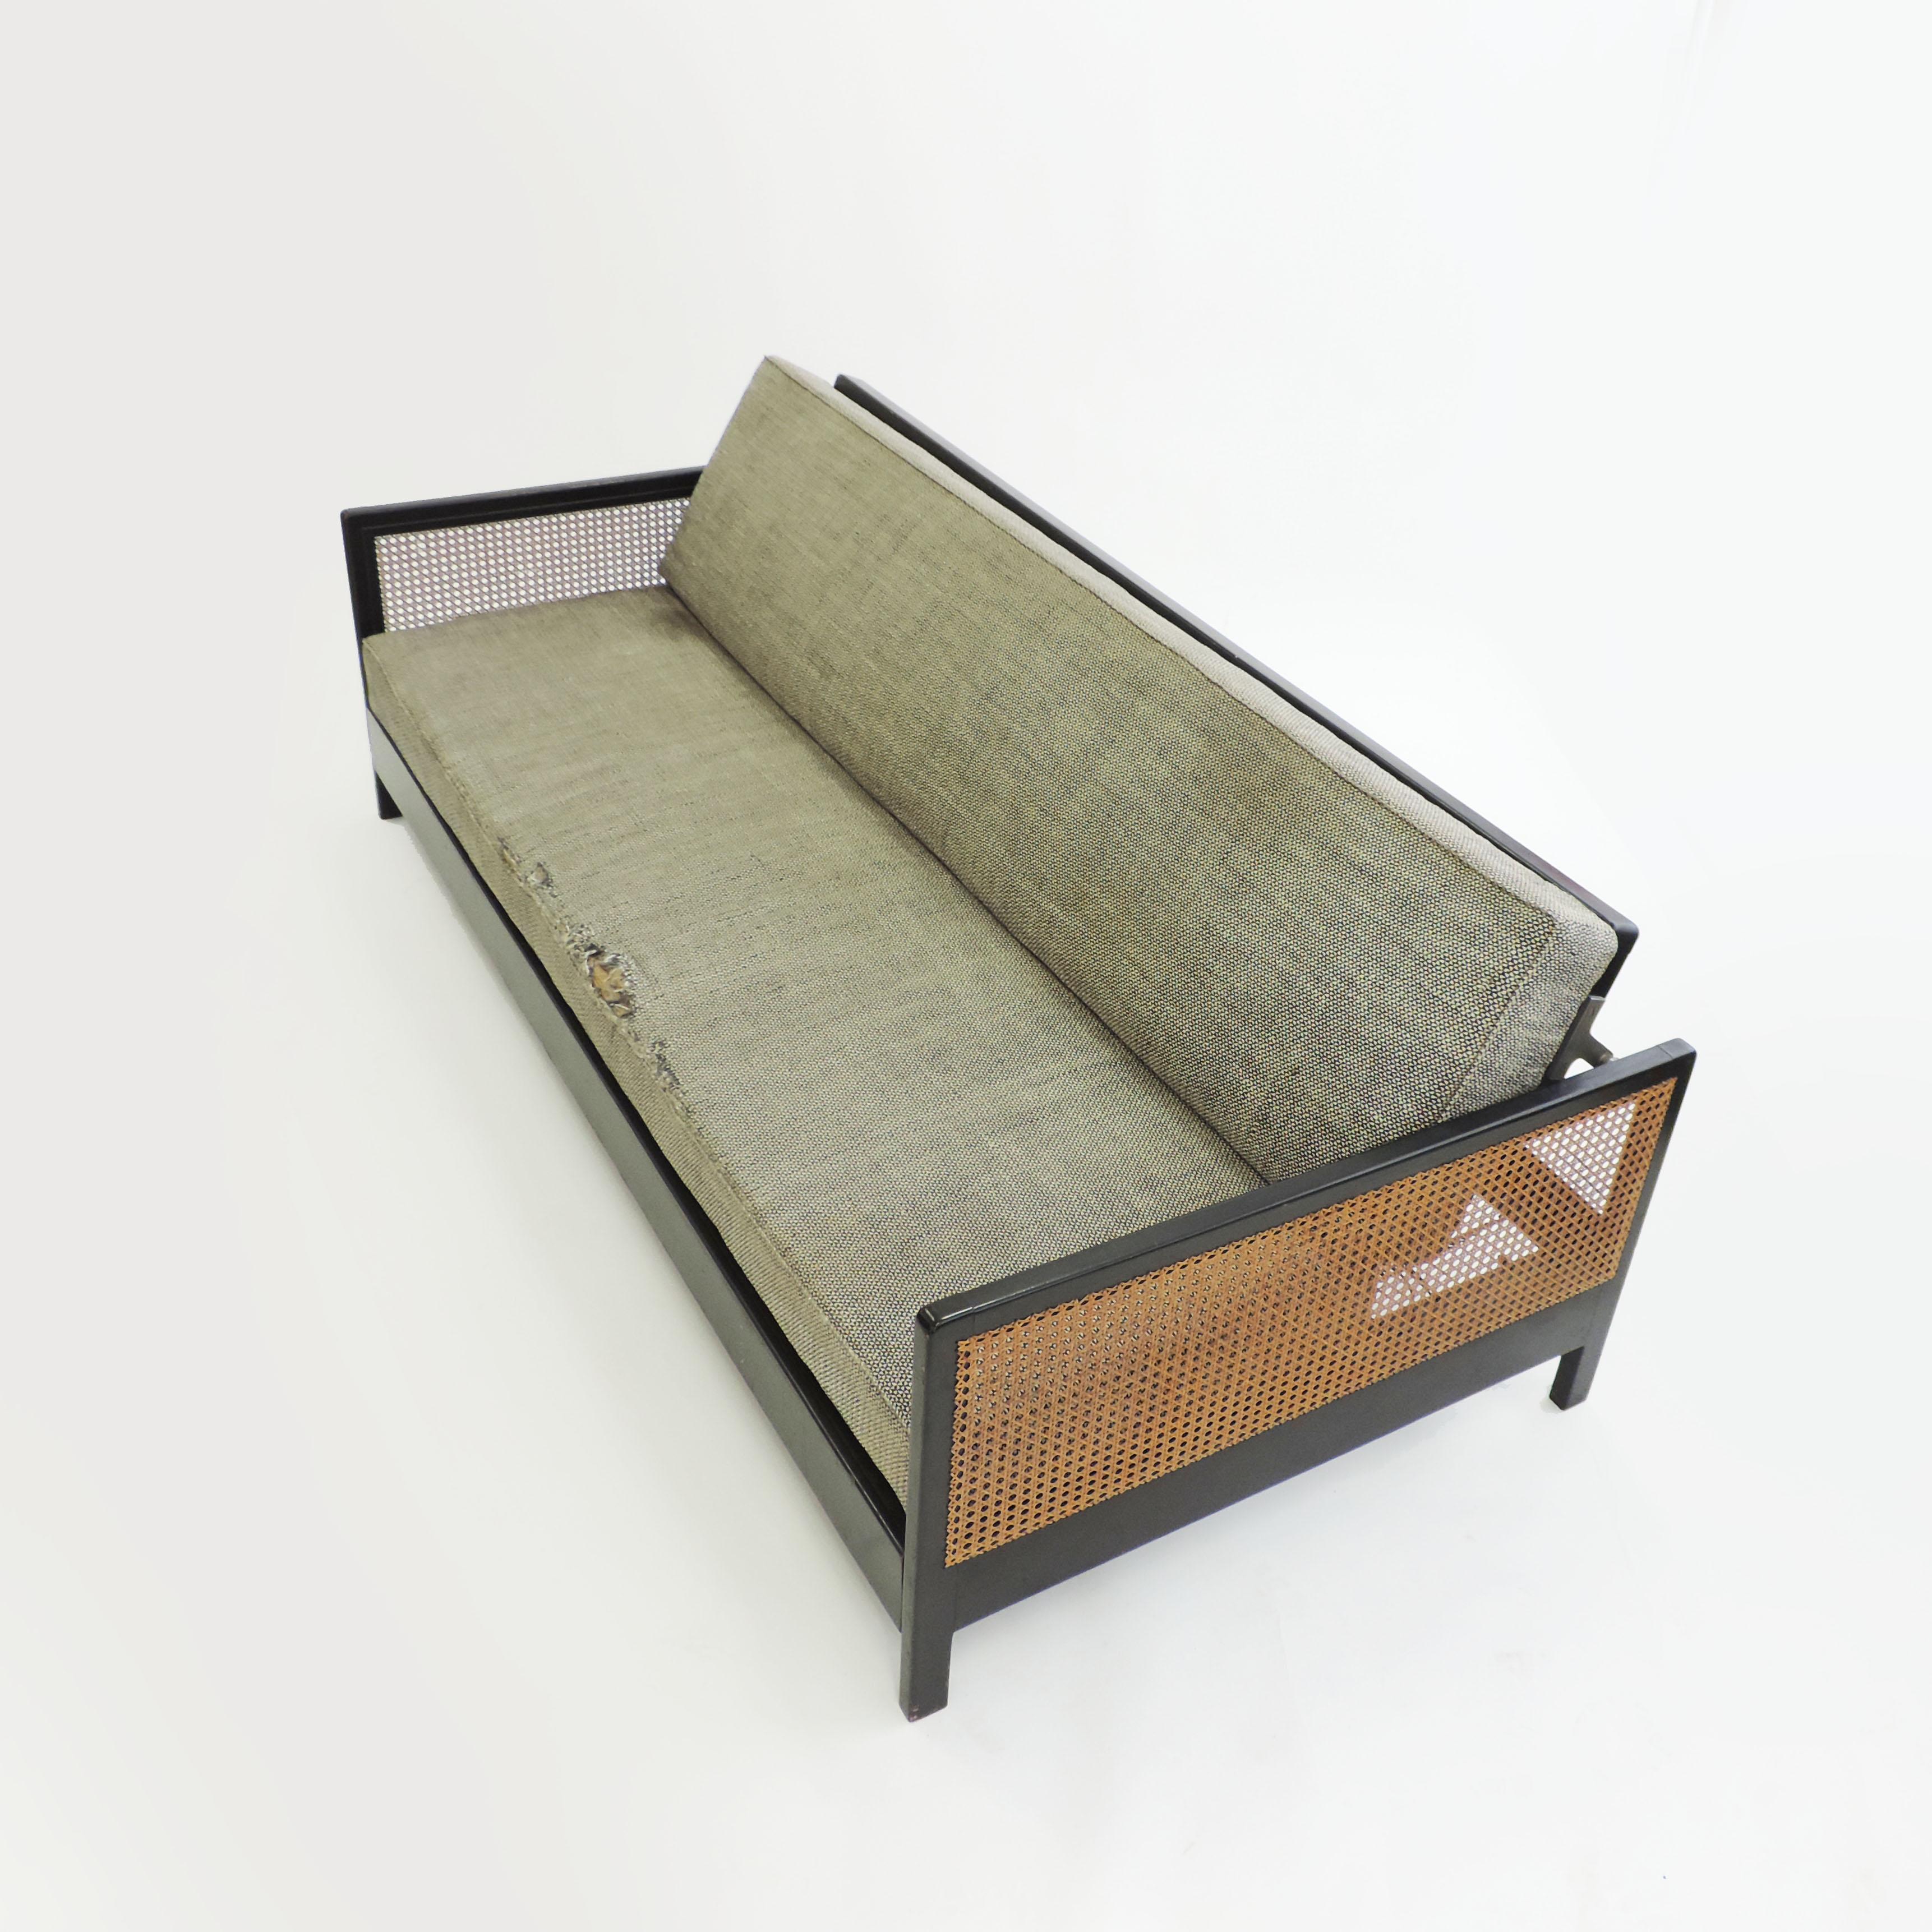 Rare Architect Werner Max Moser sofa for Wohnbedarf, Switzerland, 1930s.